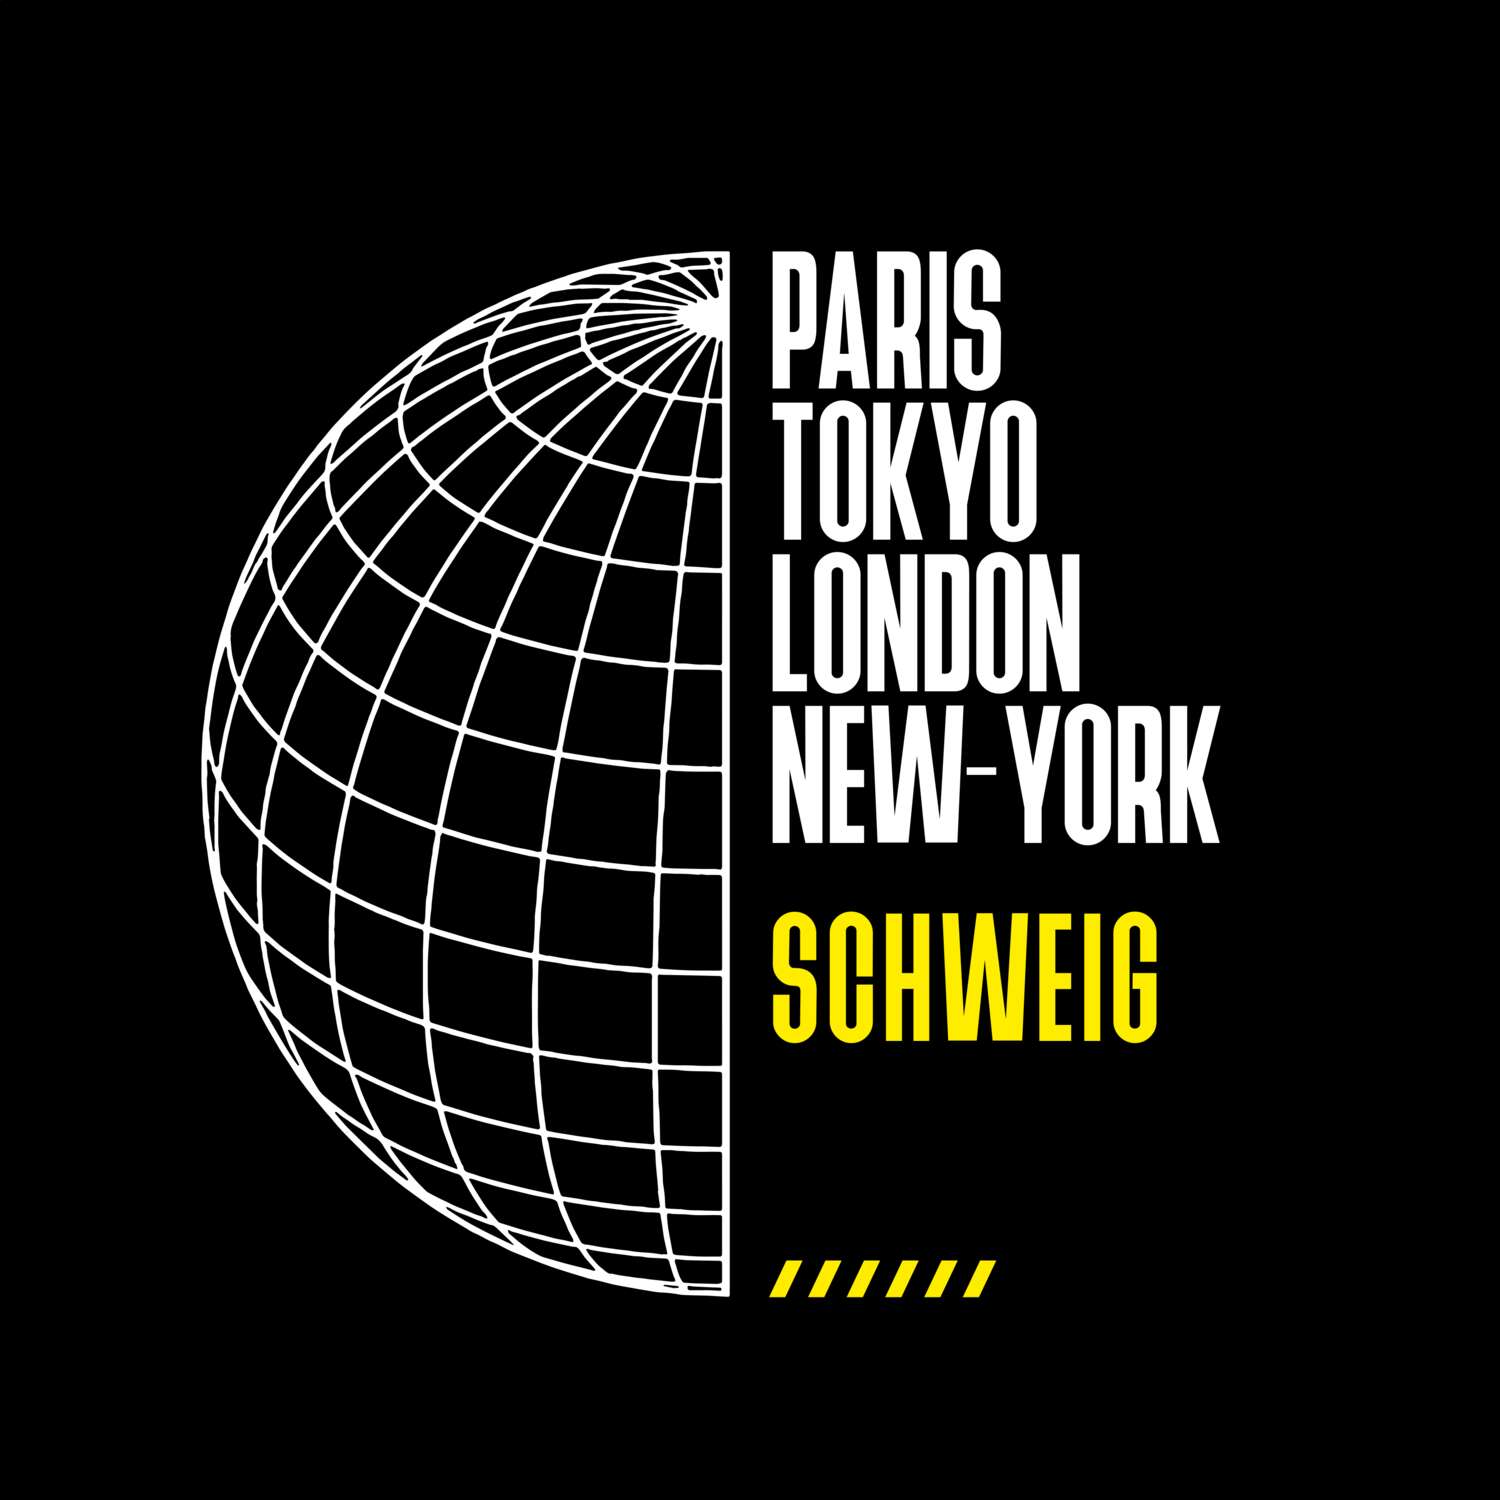 Schweig T-Shirt »Paris Tokyo London«